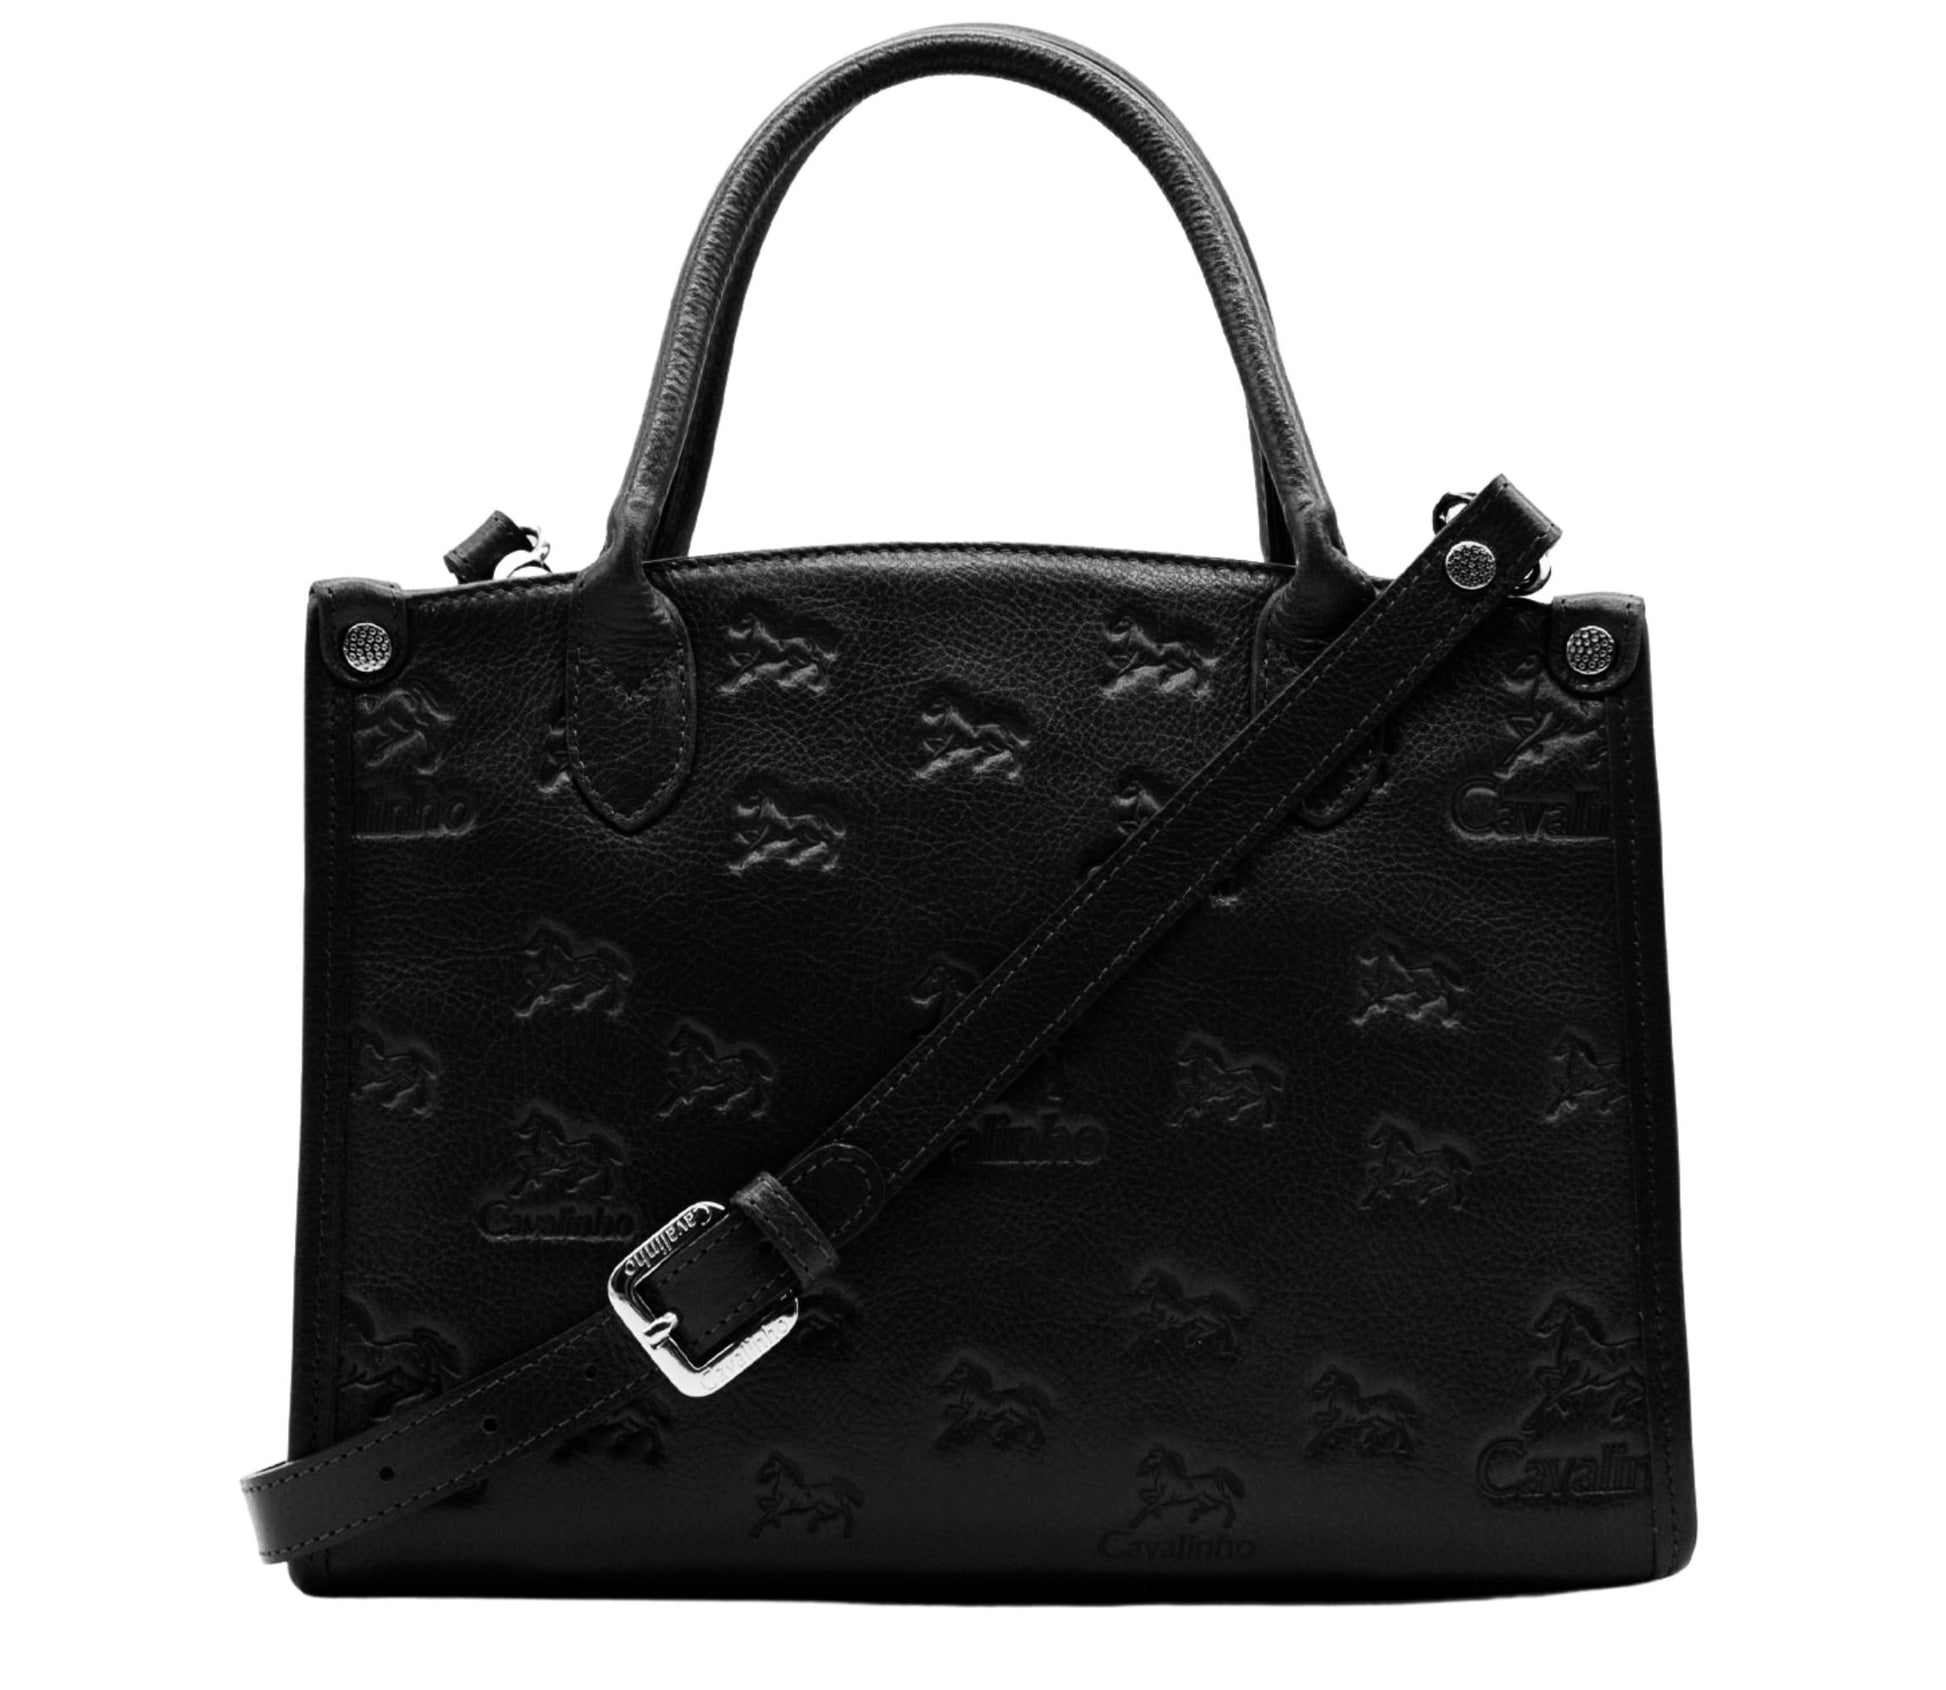 Cavalinho Cavalo Lusitano Leather Handbag - Black - 18090480.01.99_3